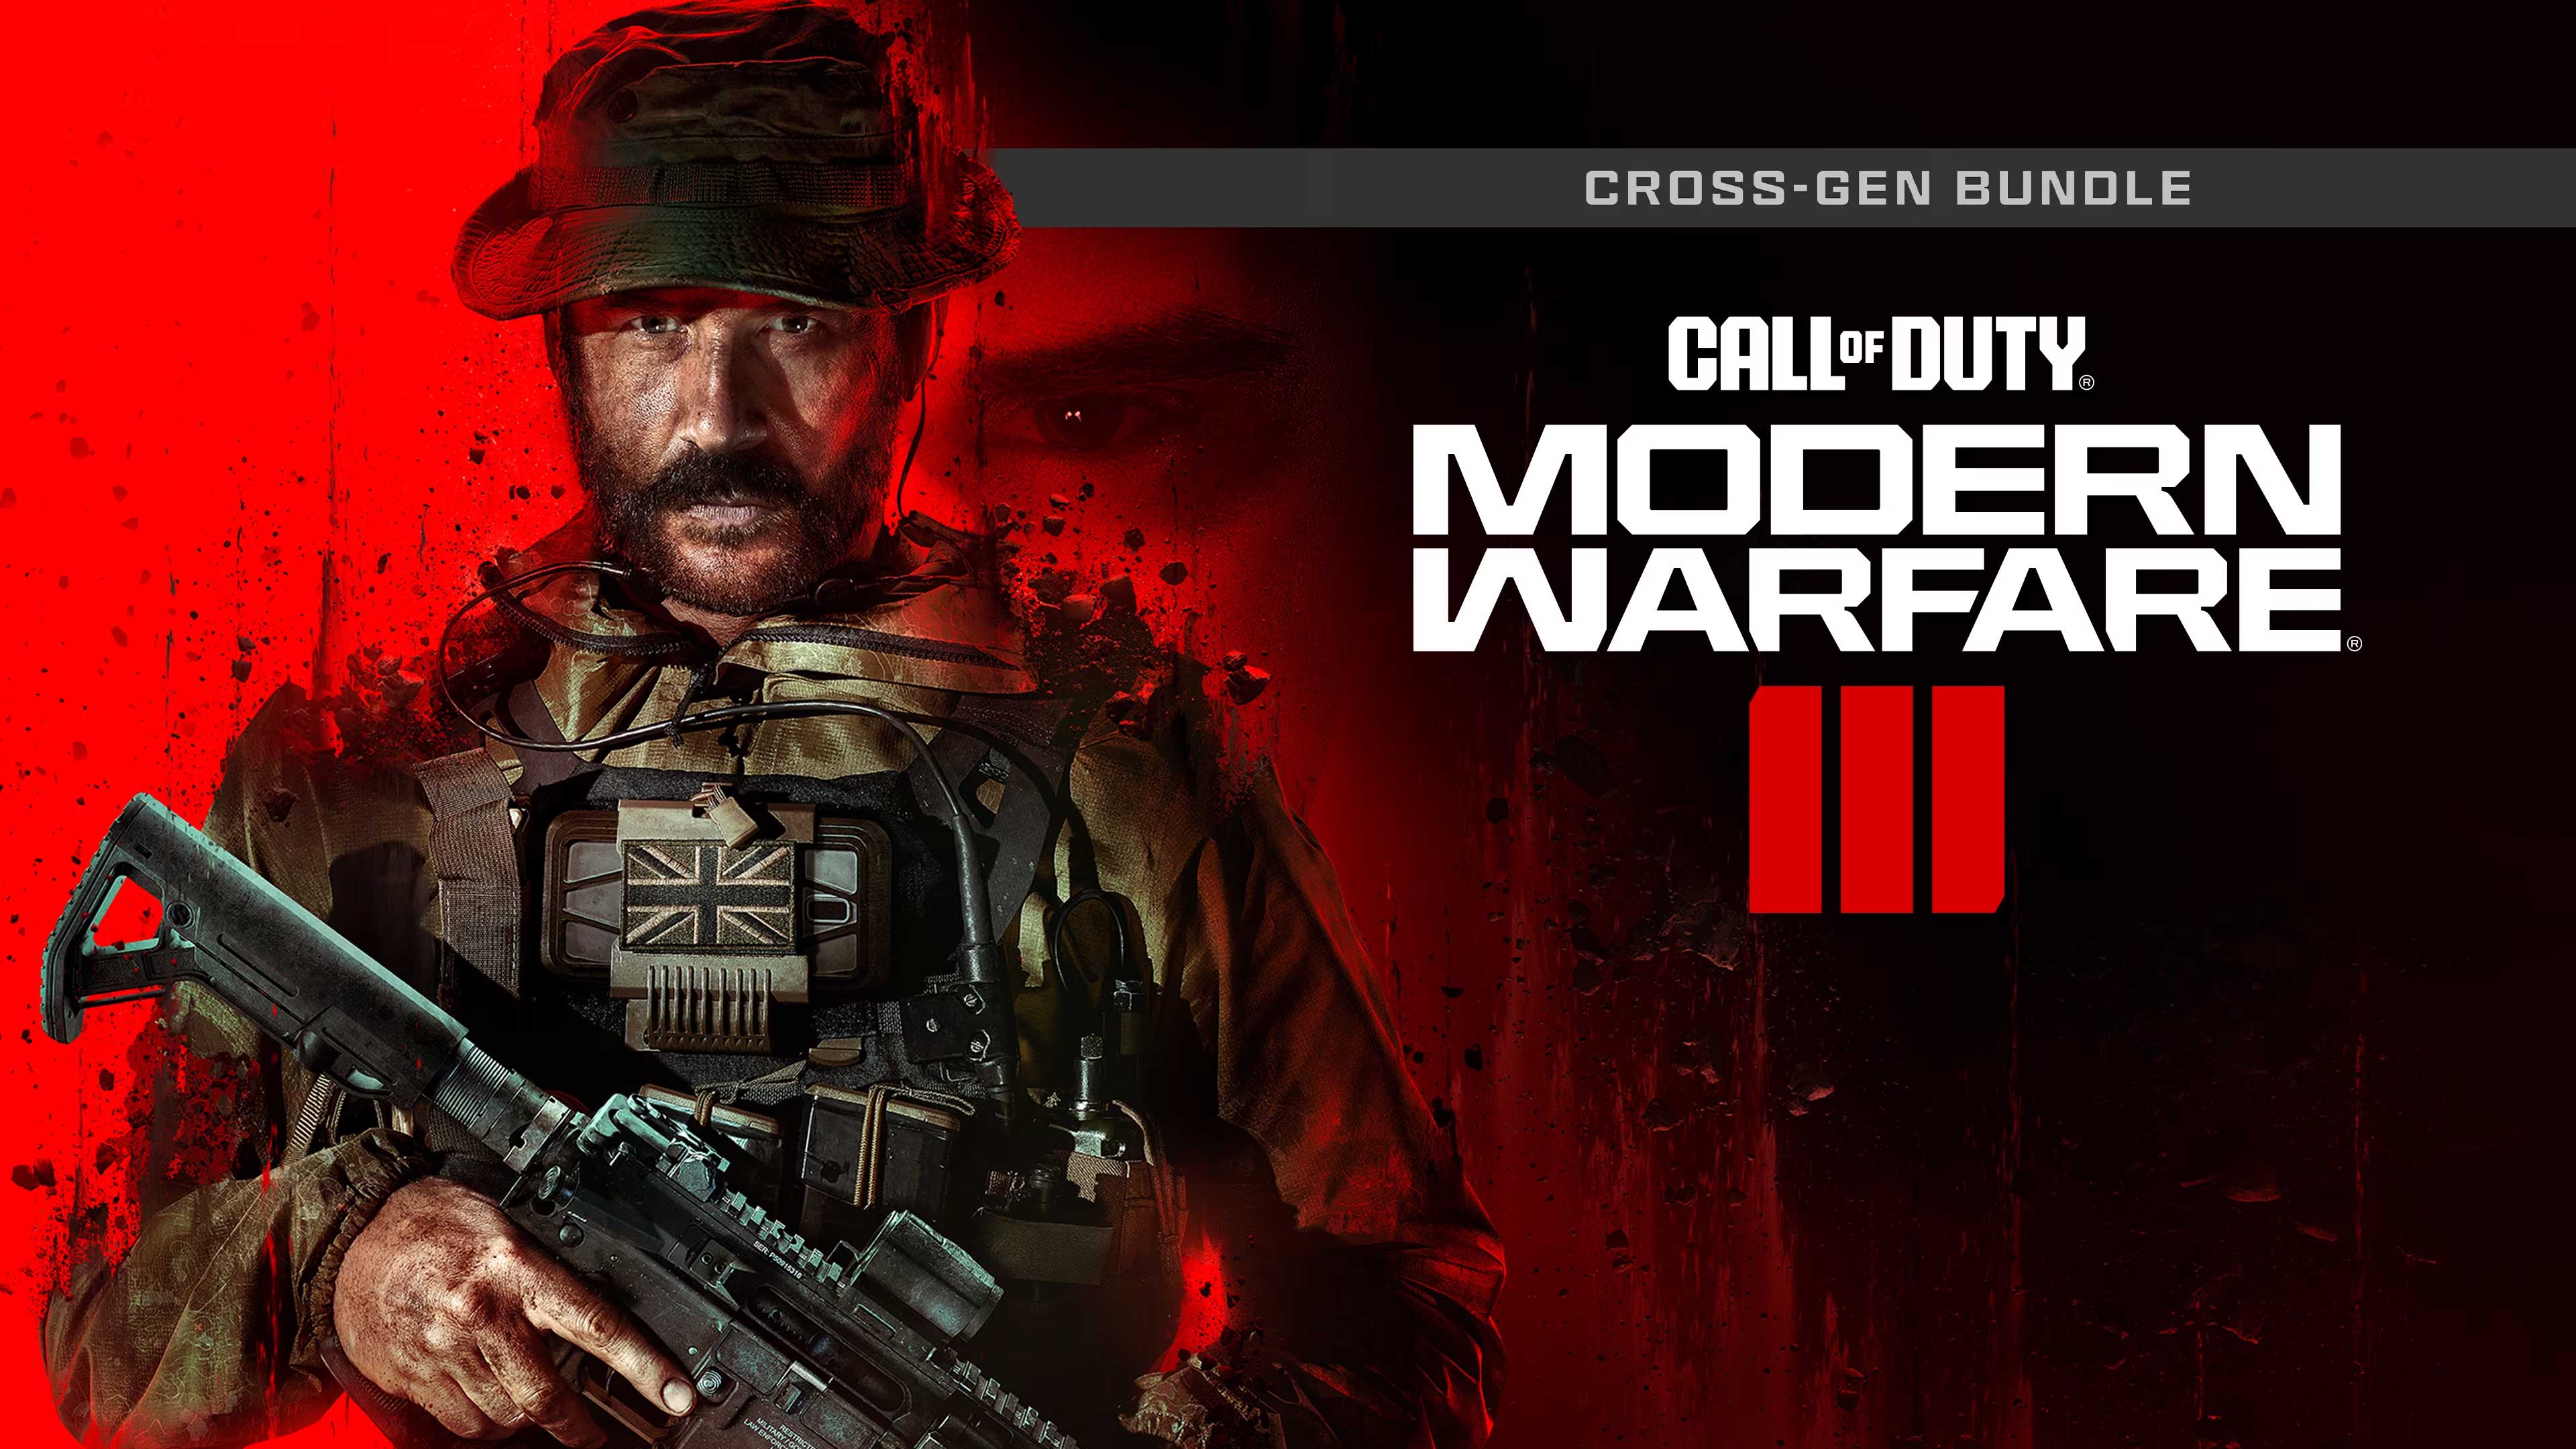 Call of Duty: Modern Warfare III - Cross-Gen Bundle, Game Key Center, gamekeycenter.com